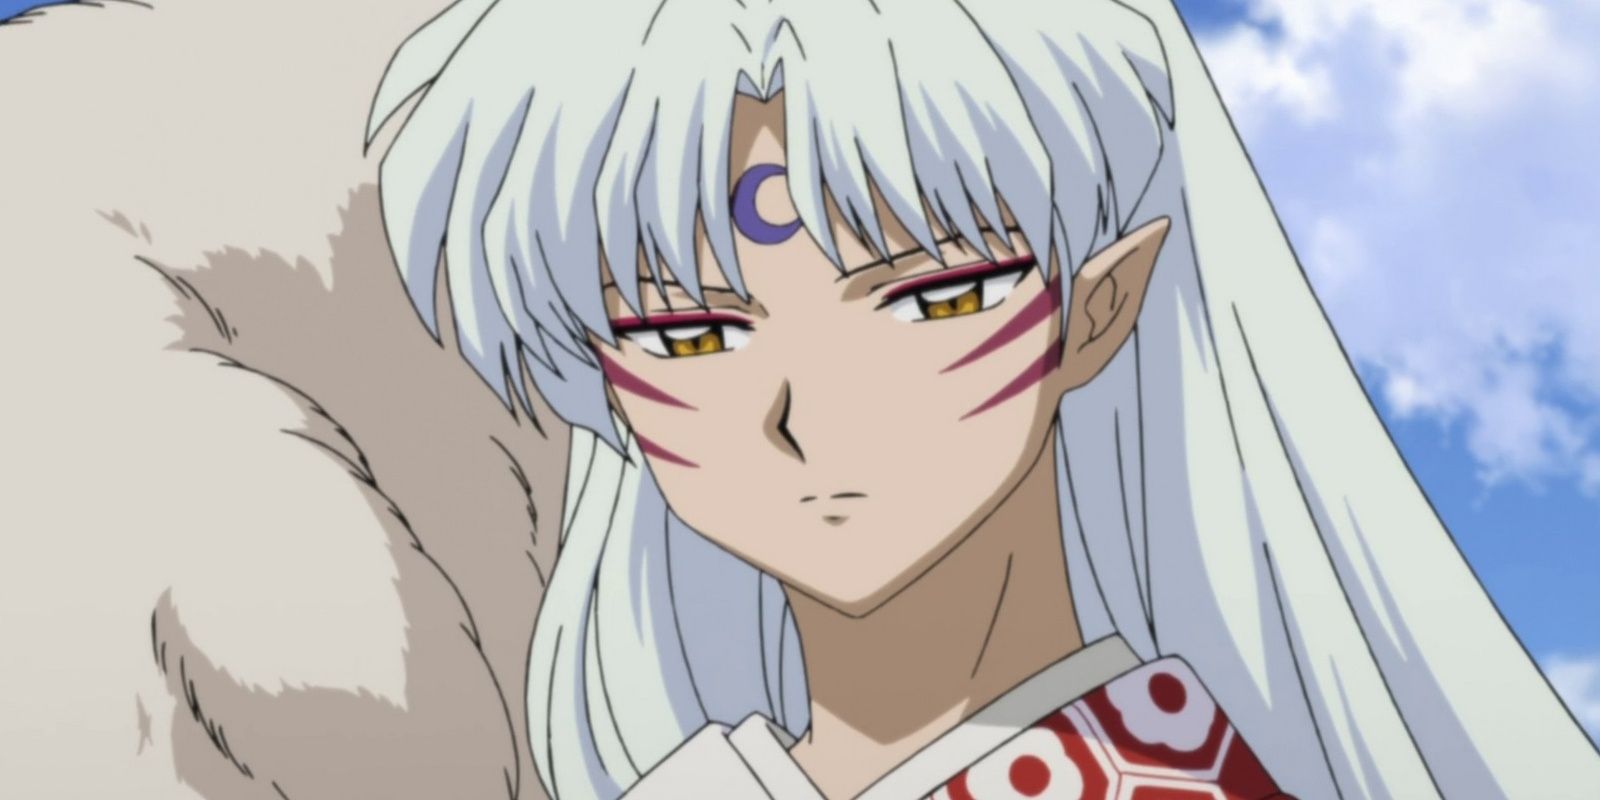 Sesshomaru from Inuyasha frowning.